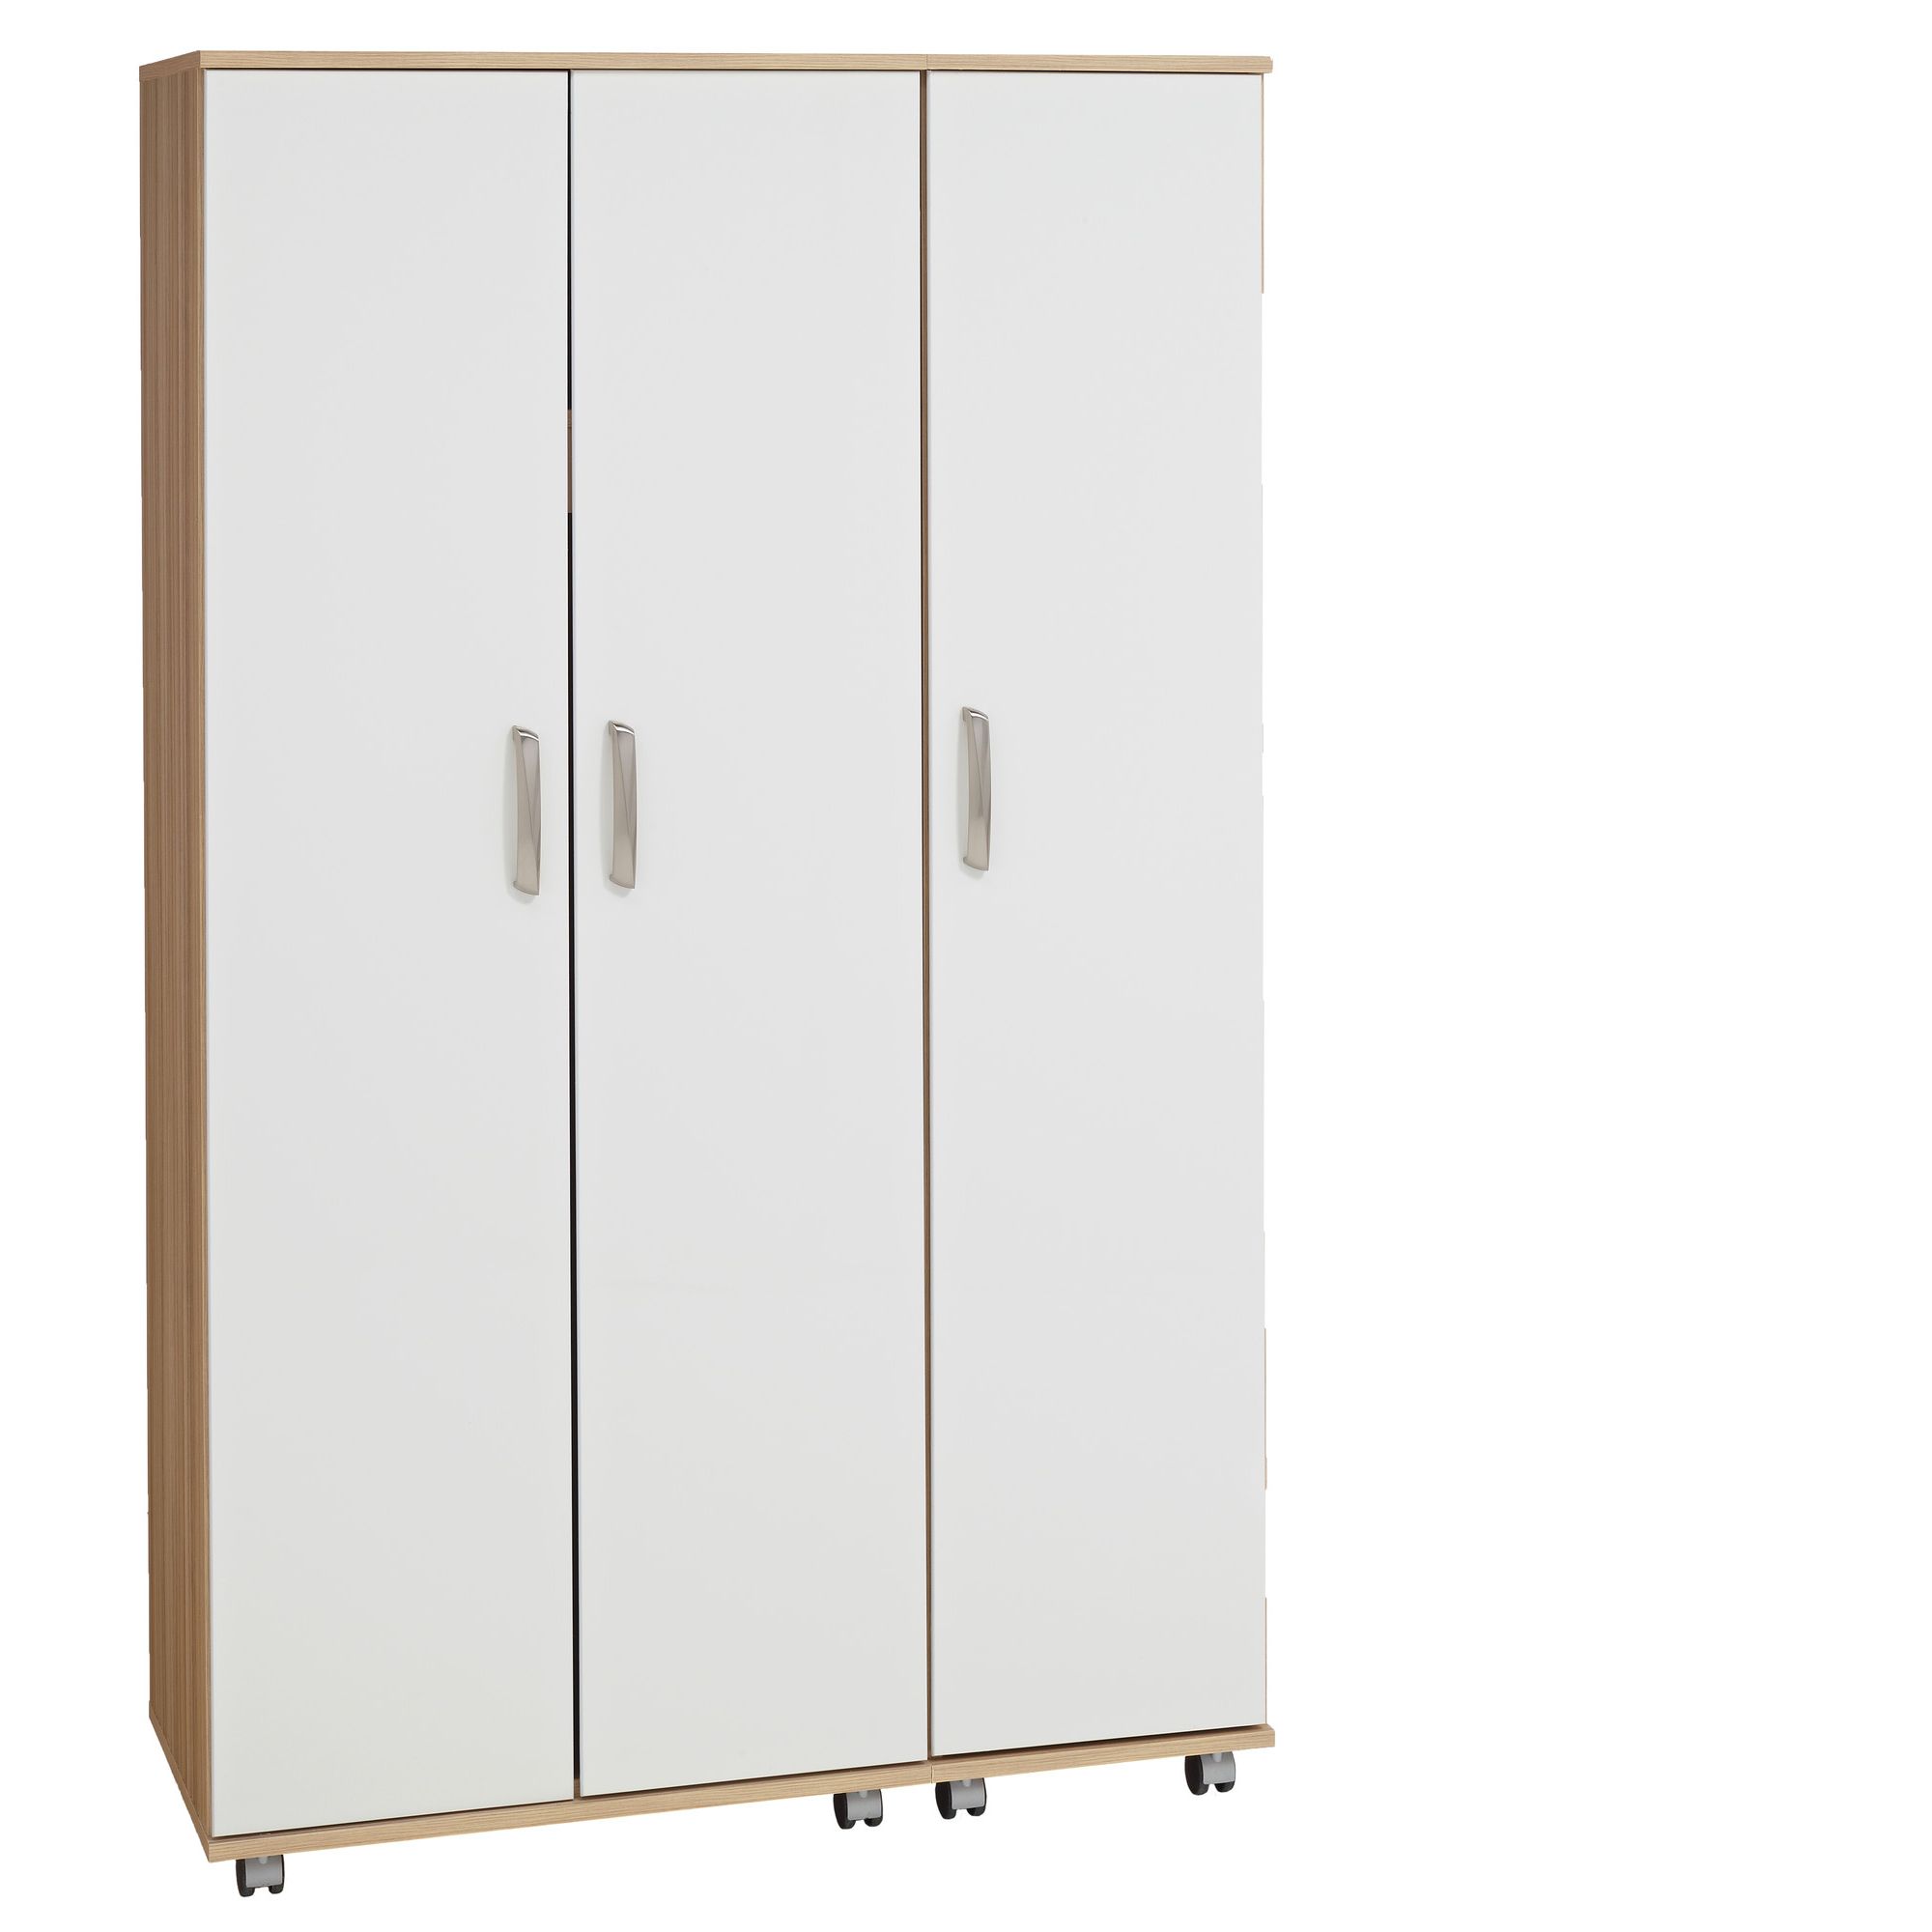 Ideal Furniture Regal 3 Door Plain Wardrobe in white at Tesco Direct